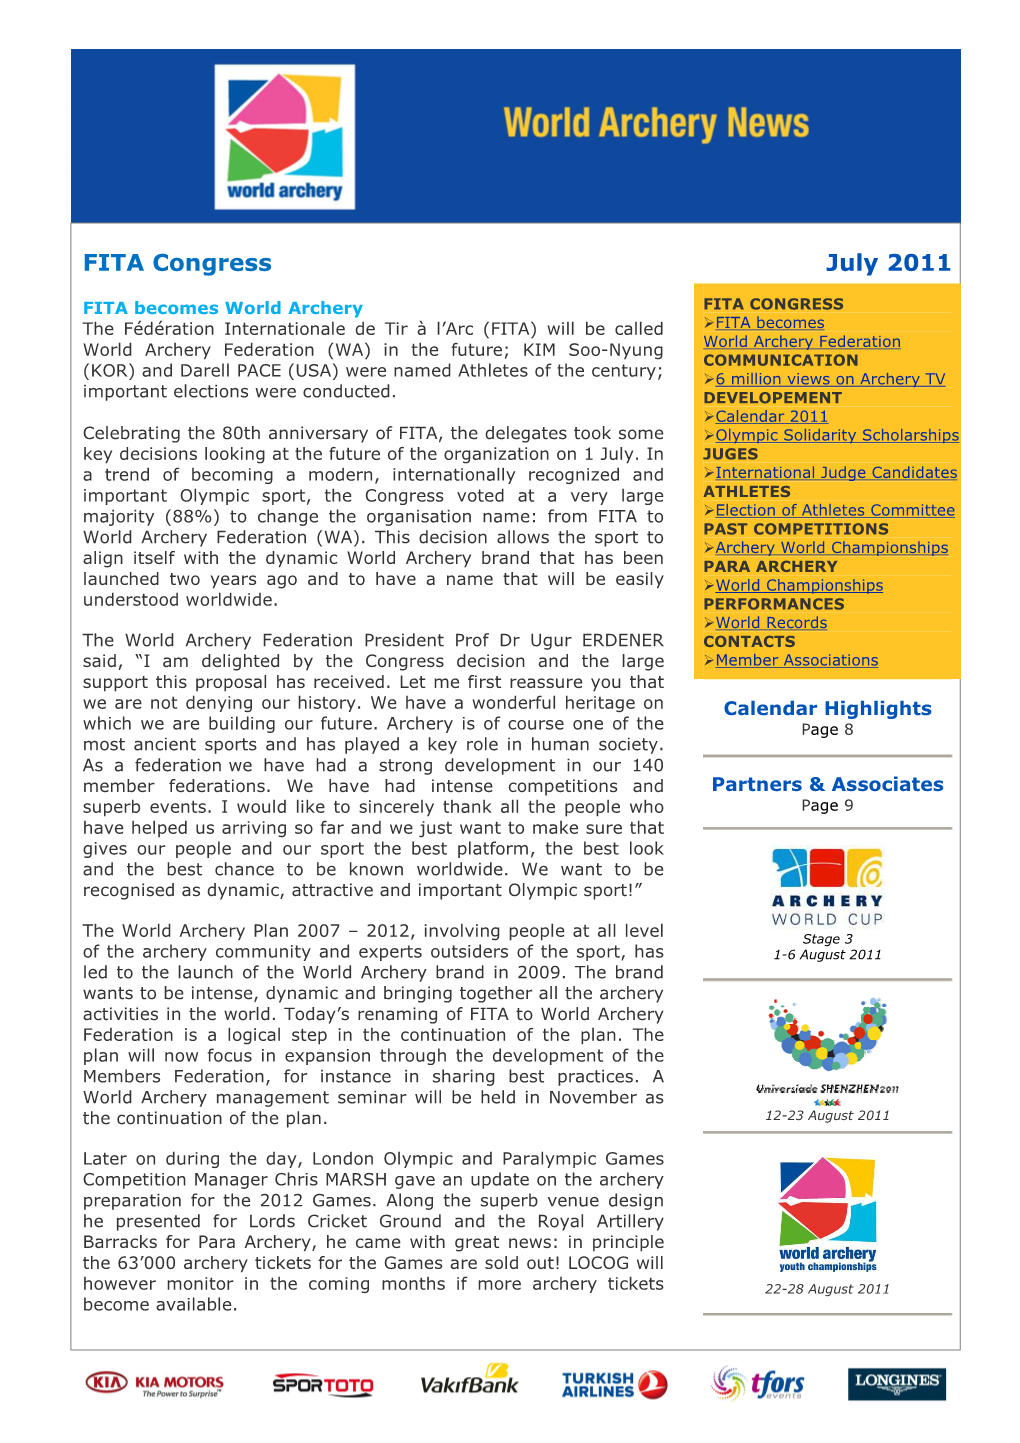 FITA Congress July 2011